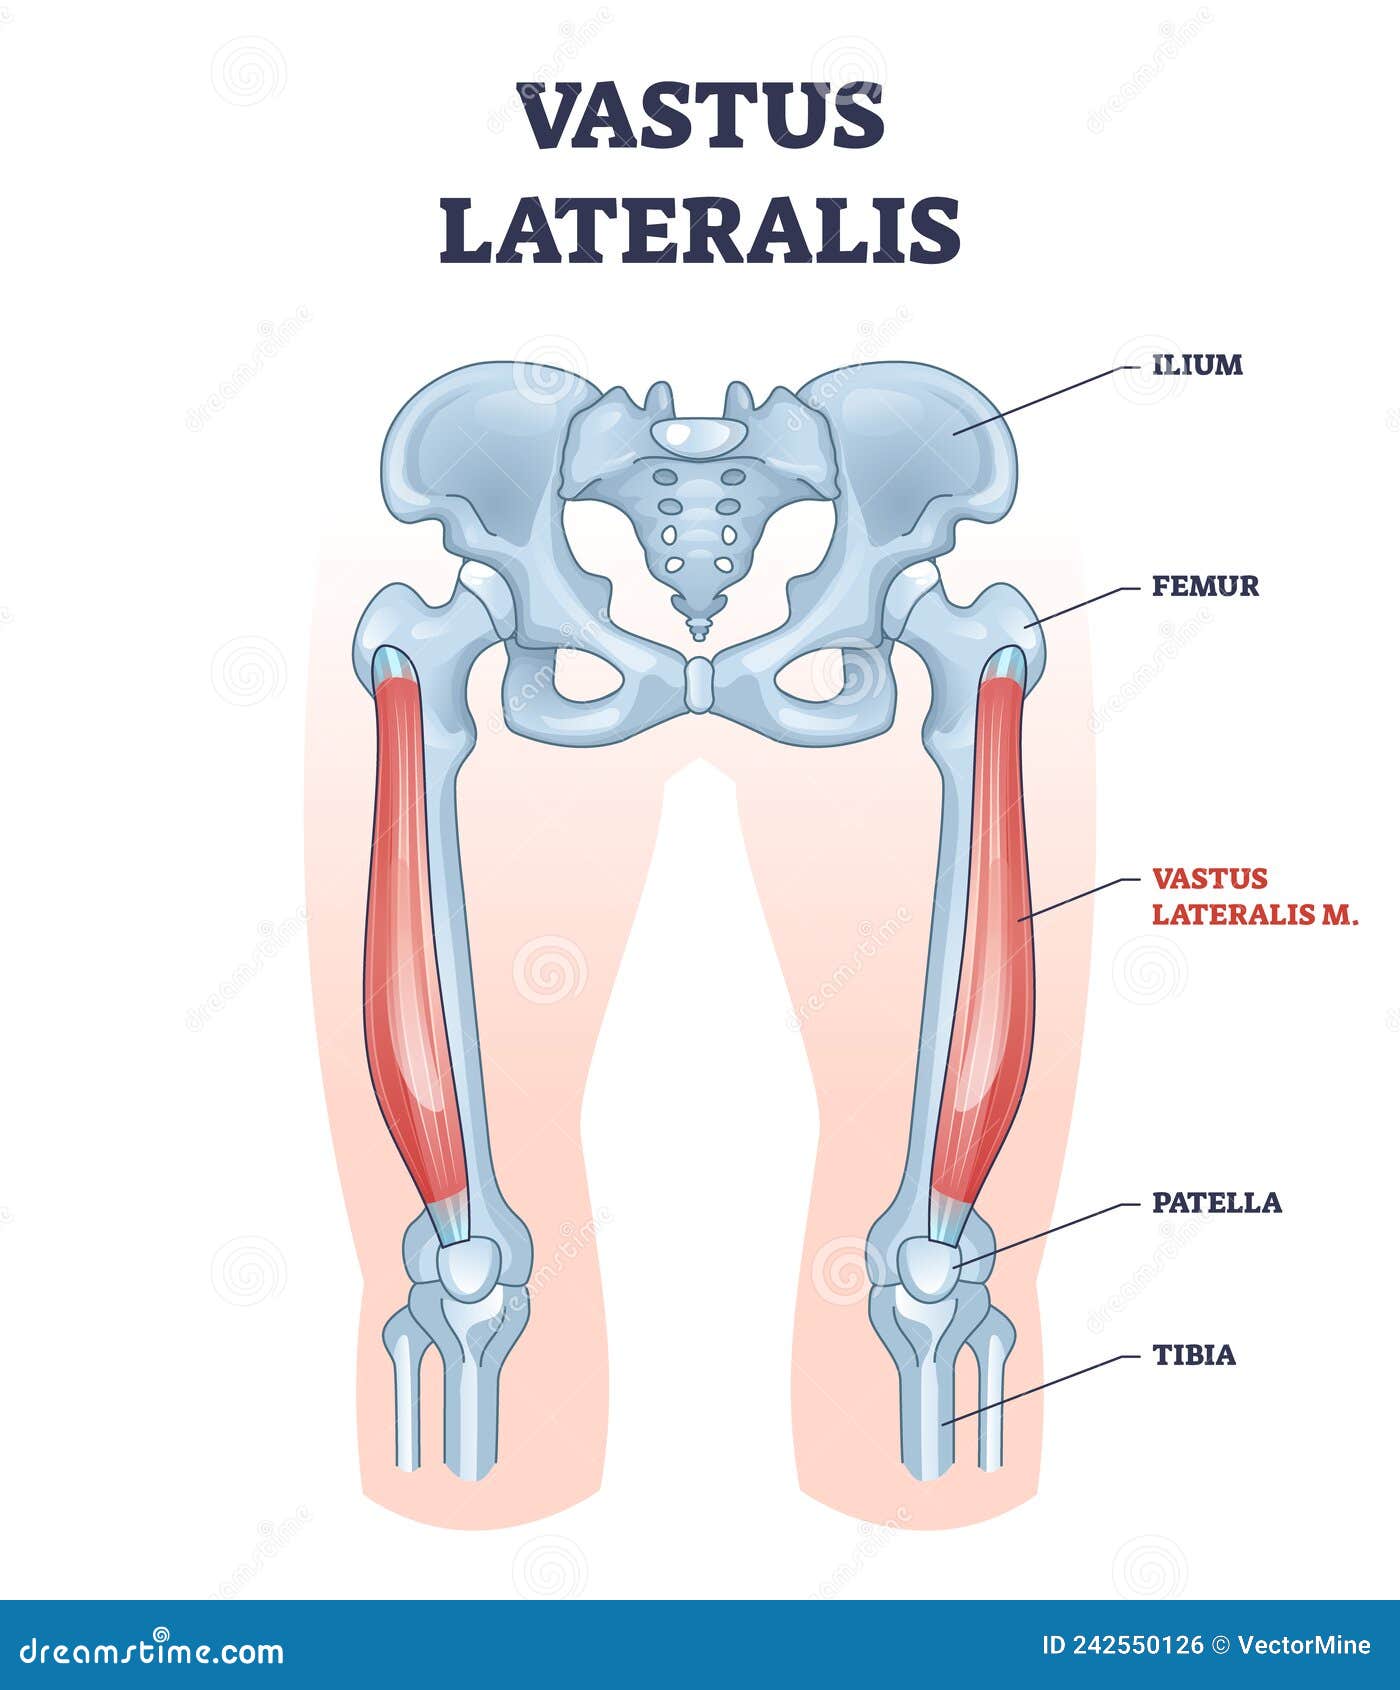 vastus lateralis muscle location and hip or leg skeletal bone outline diagram